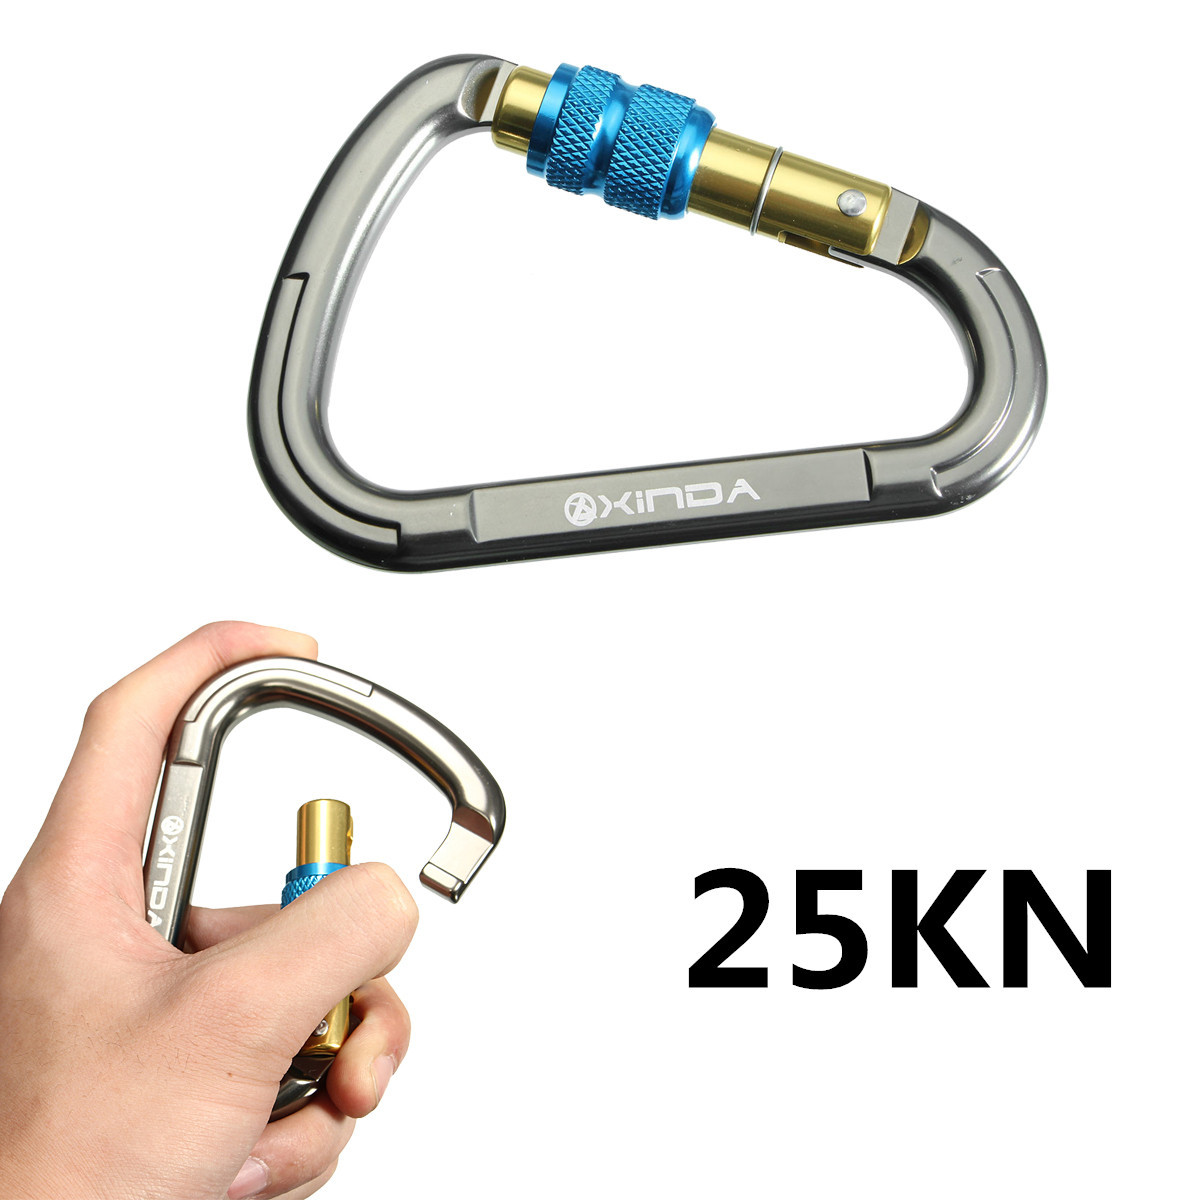 

INDA 25KN 5600lbs Aluminum D Shape Carabiner Screw Locking Caving Climbing Key Lock Carabiner Buckle